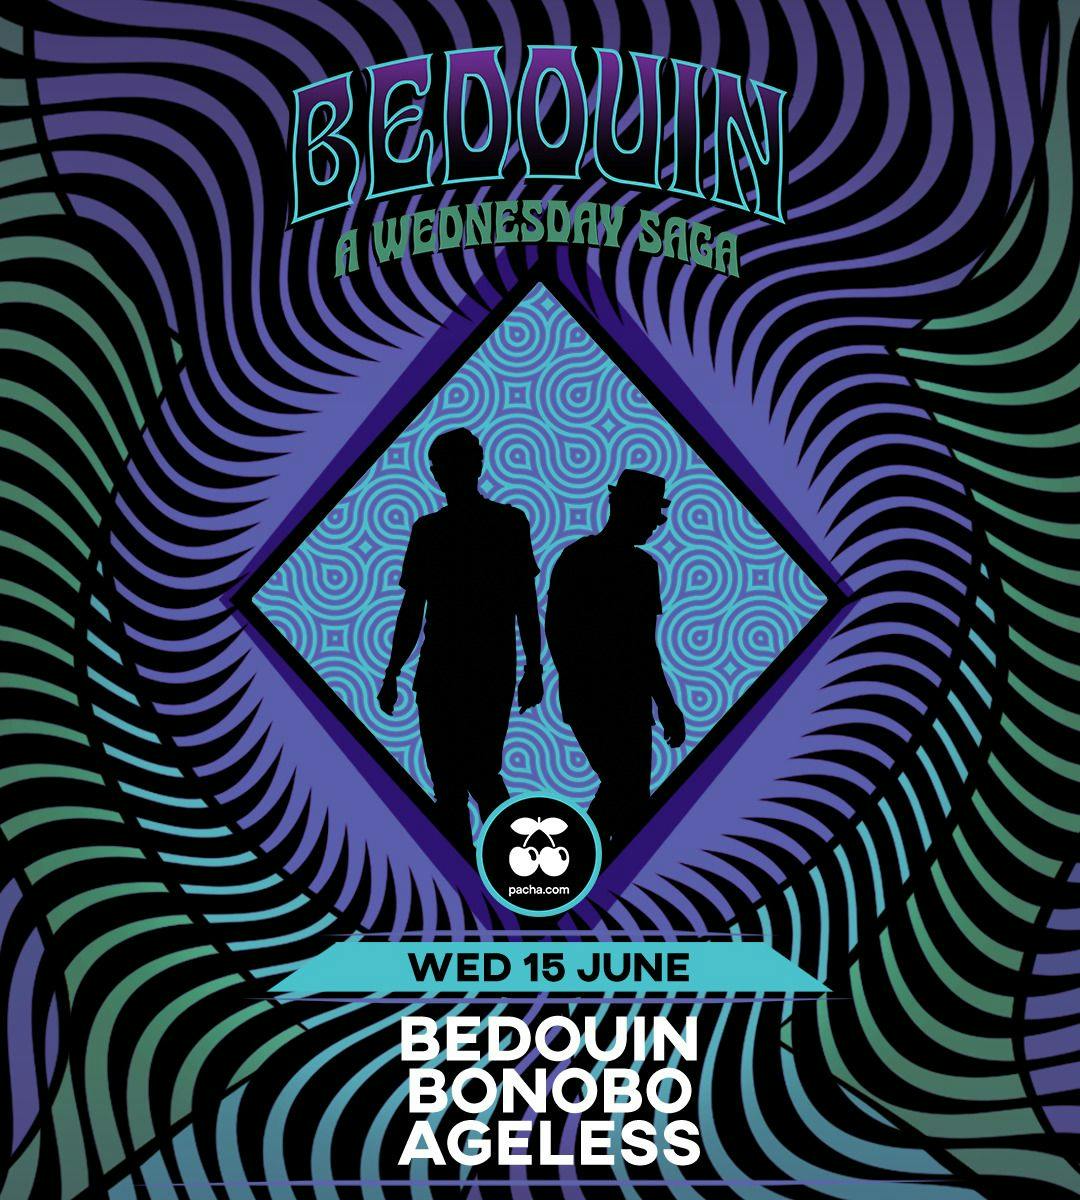 Bedouin, A Wednesday Saga event artwork